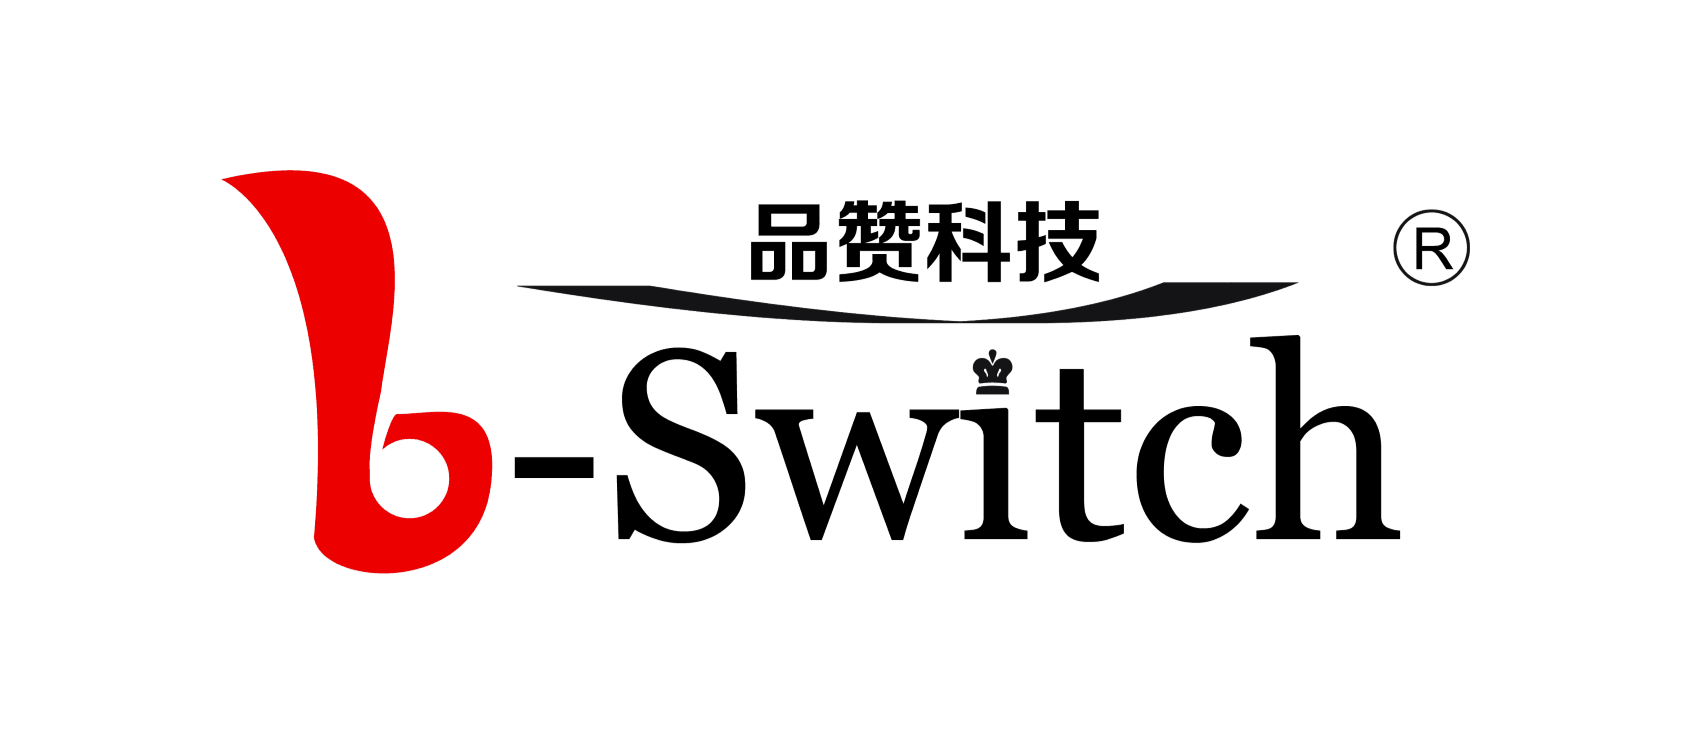 G-Switch品赞